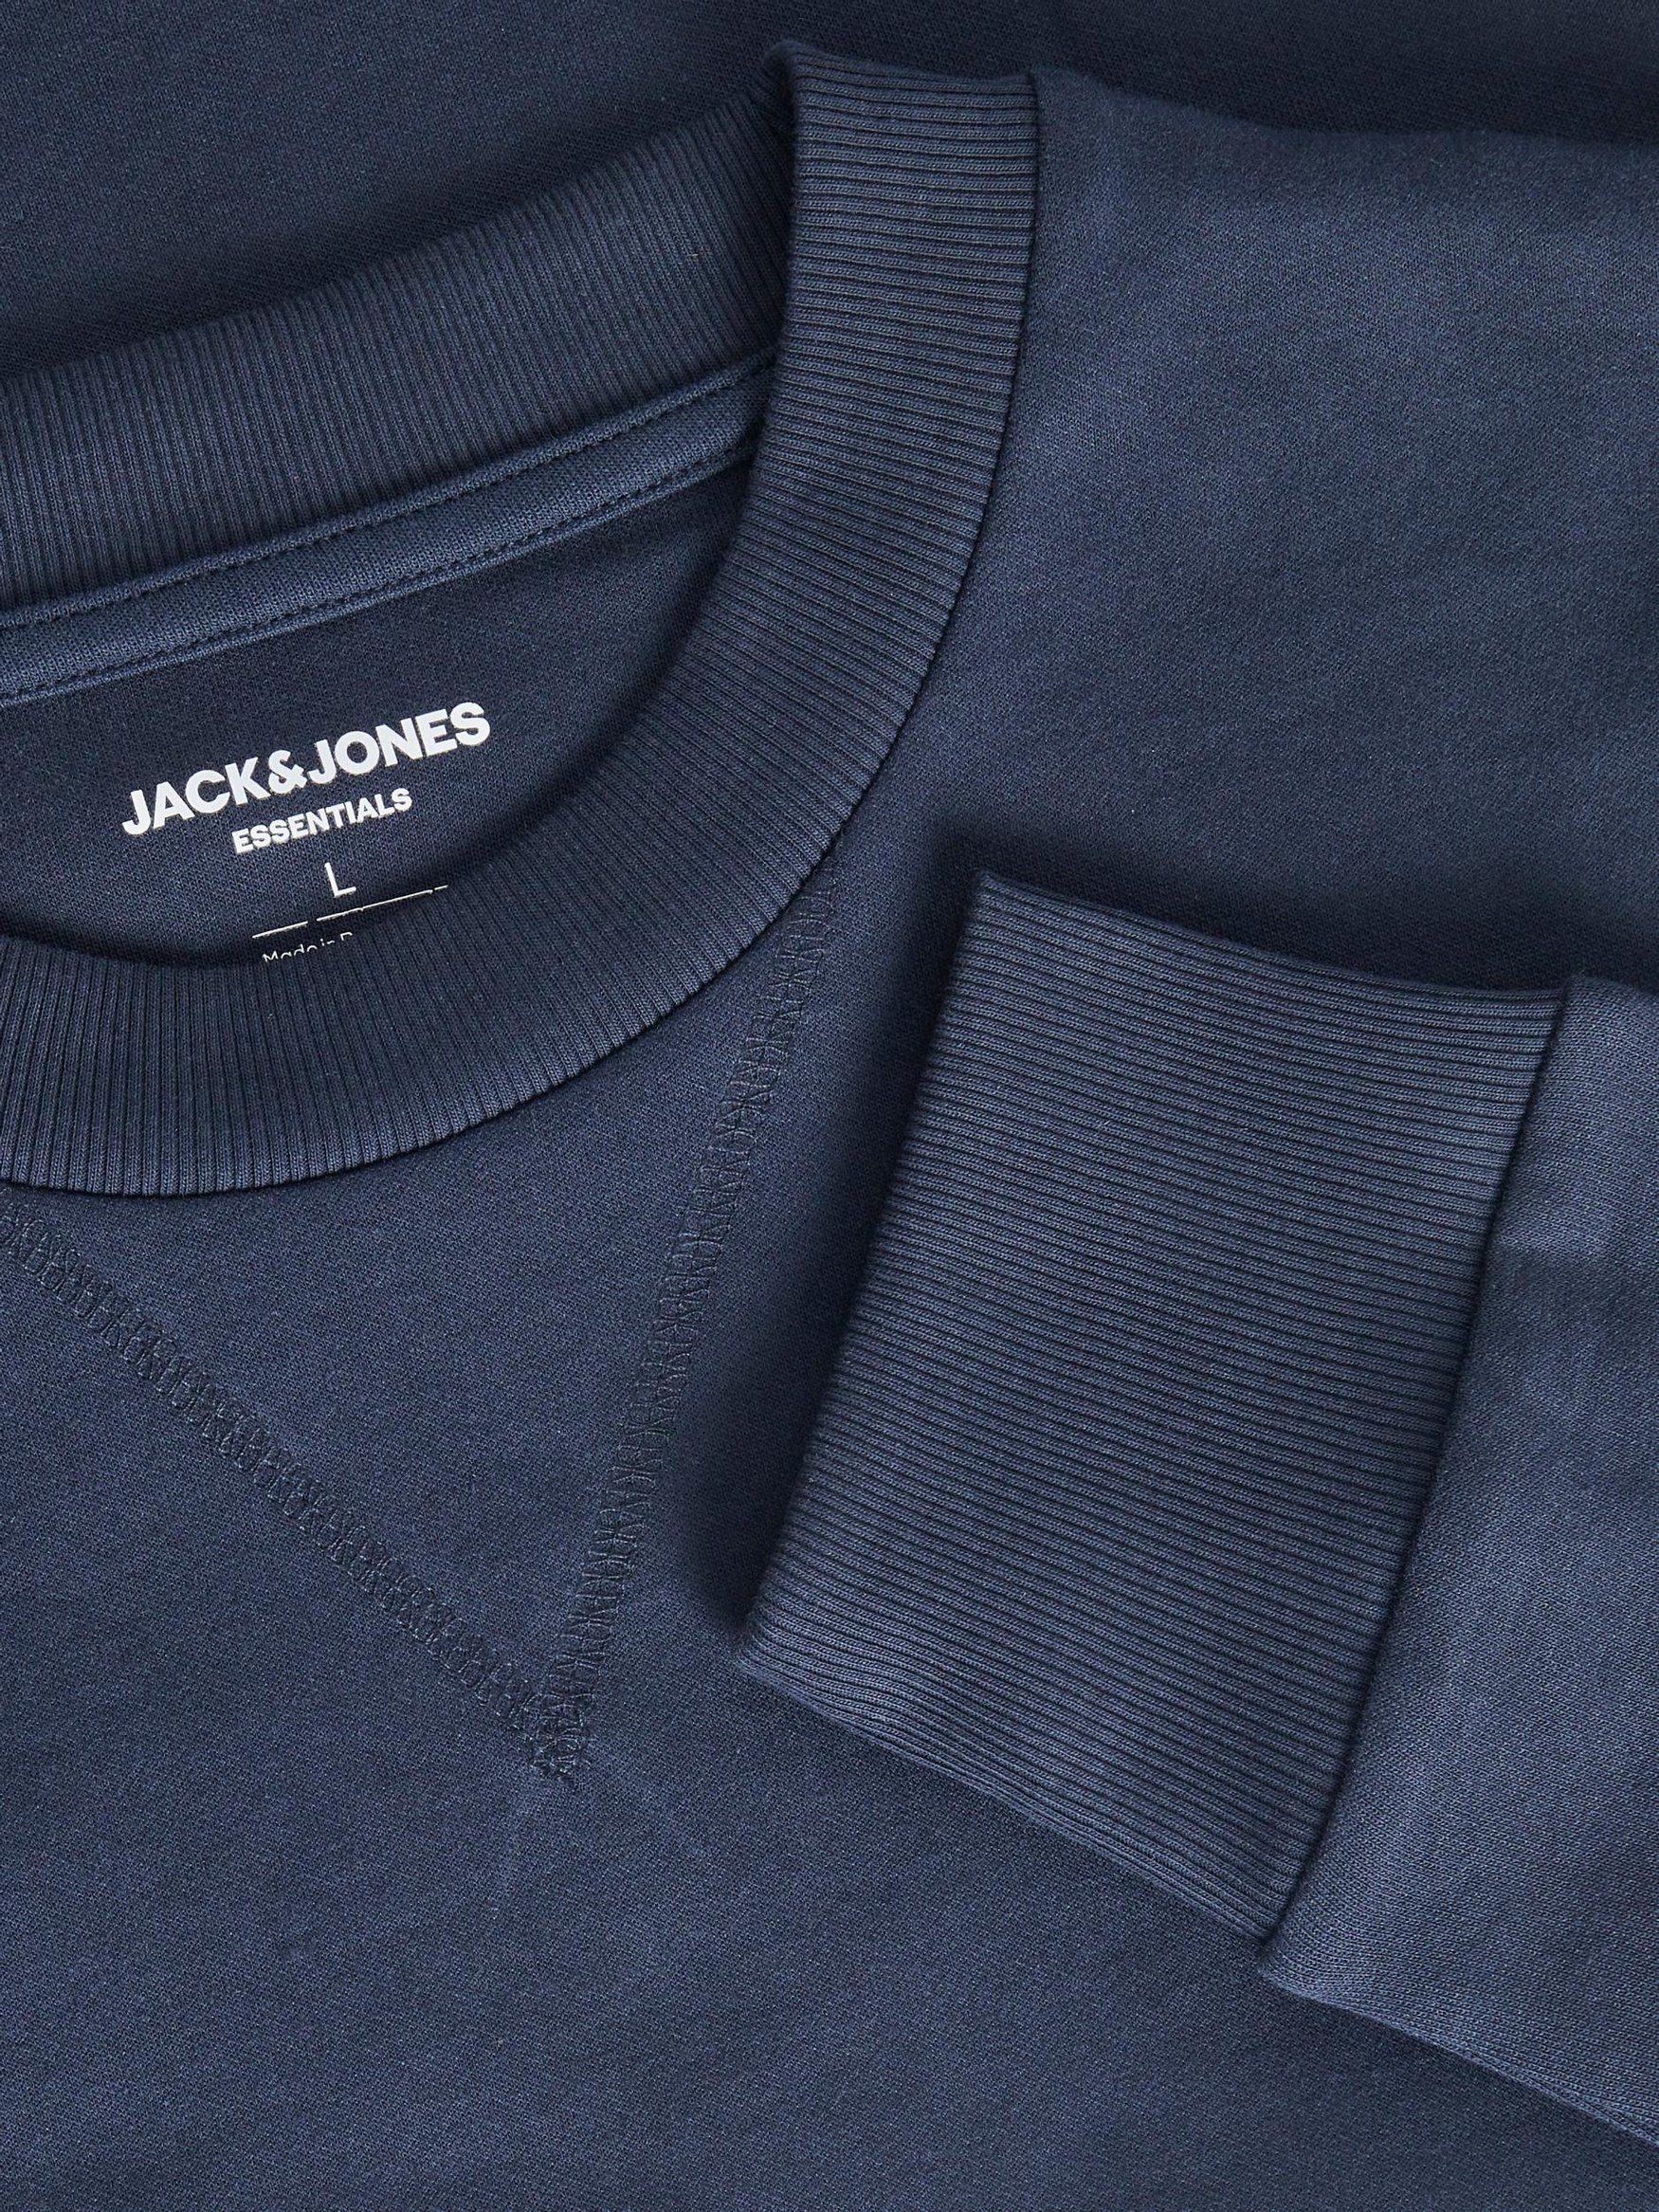 Jones & 4832 Basic JJEBASIC Plus Übergröße Size Jack Sweatshirt Sweater Sweatshirt in Pullover Navy